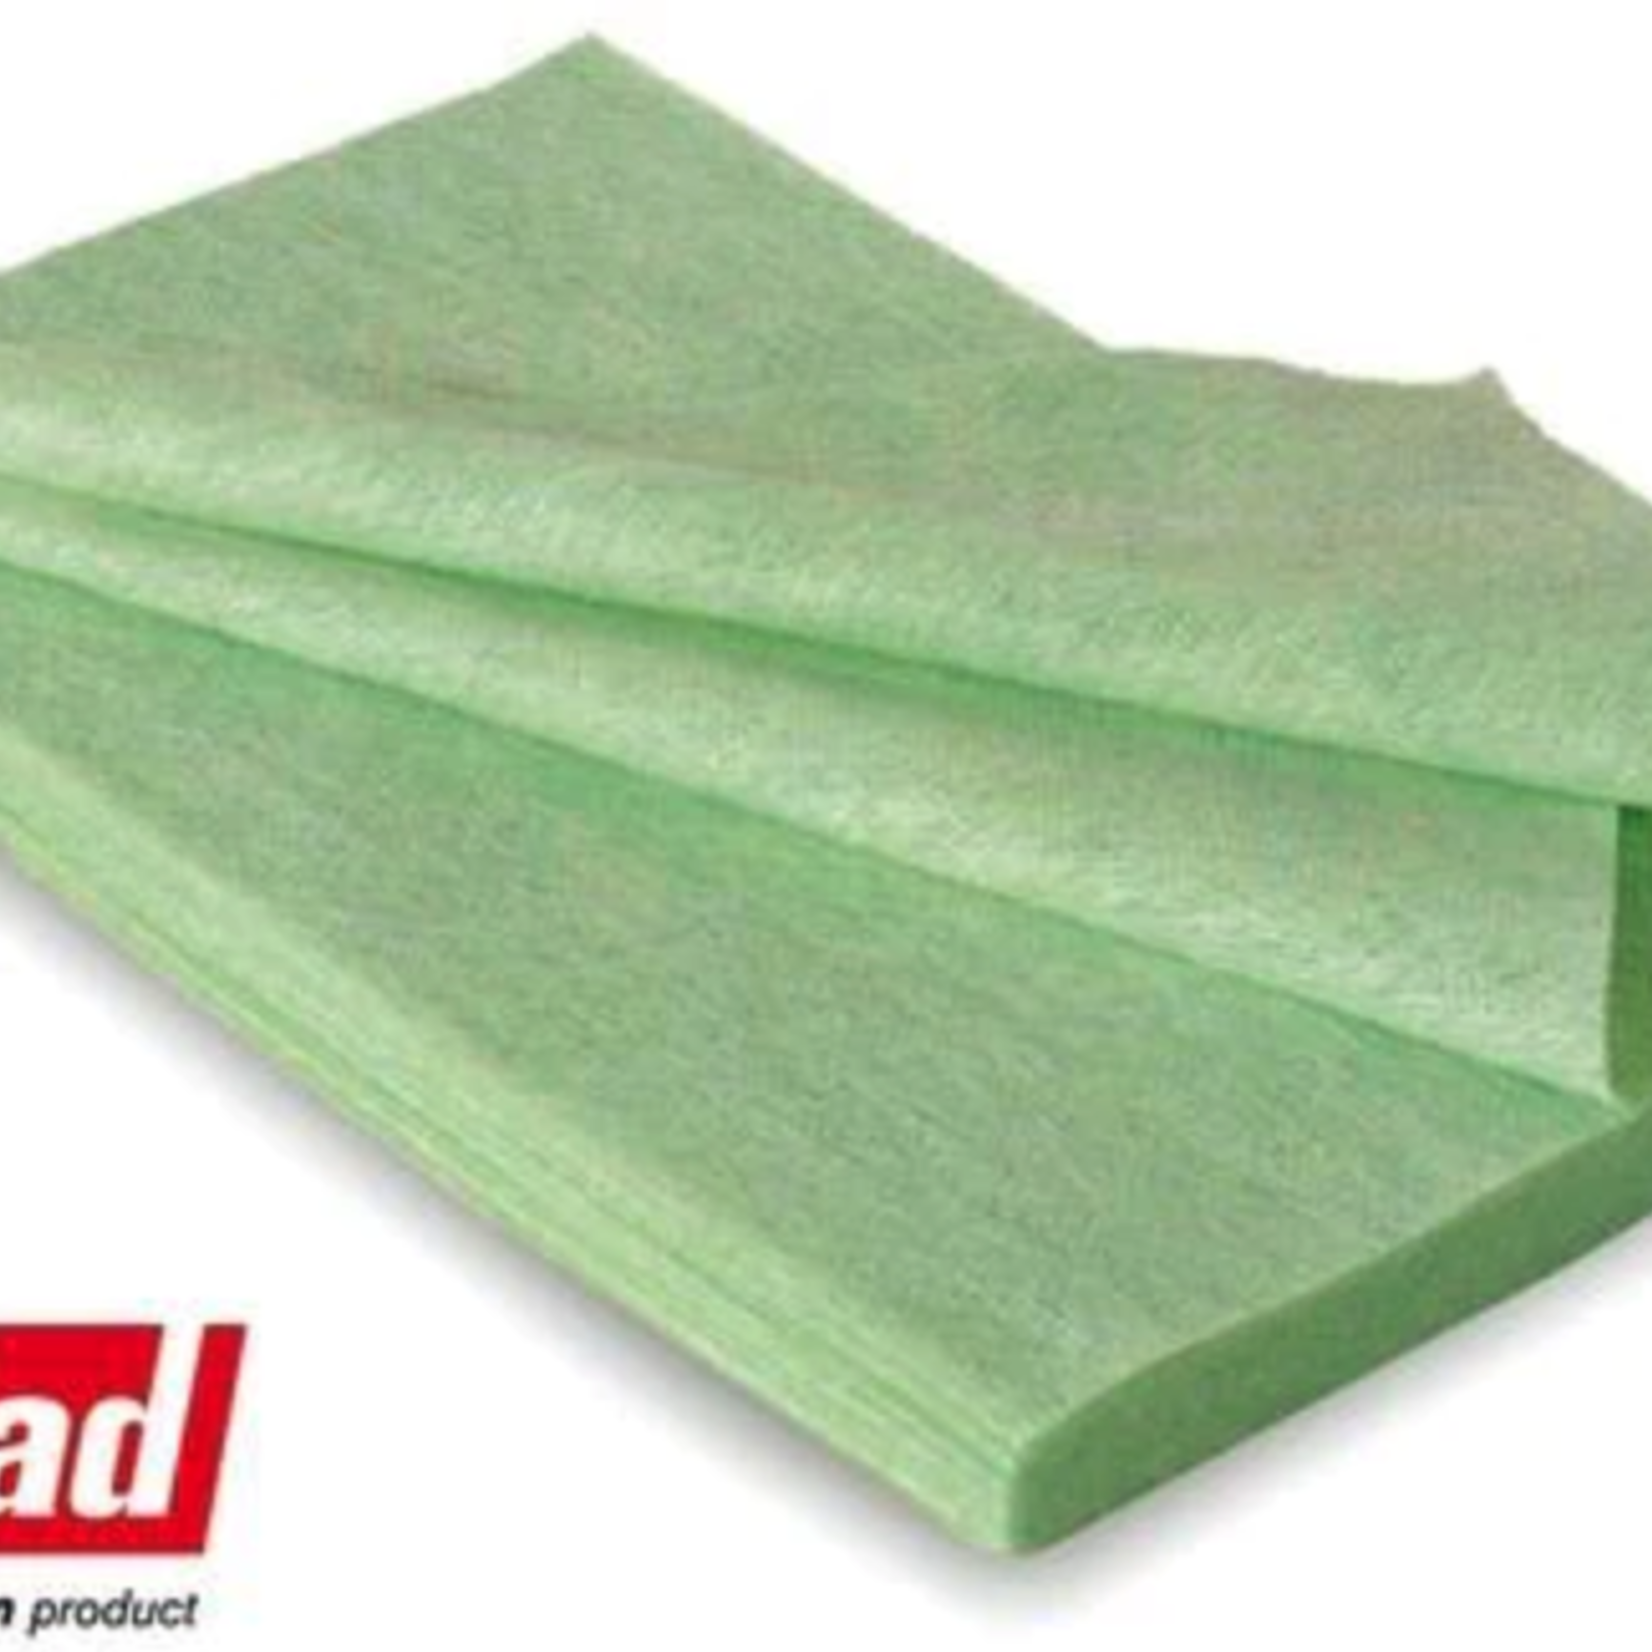 COLAD Colad TC Tack Cloth Green very low tack blend rag 10 Pack